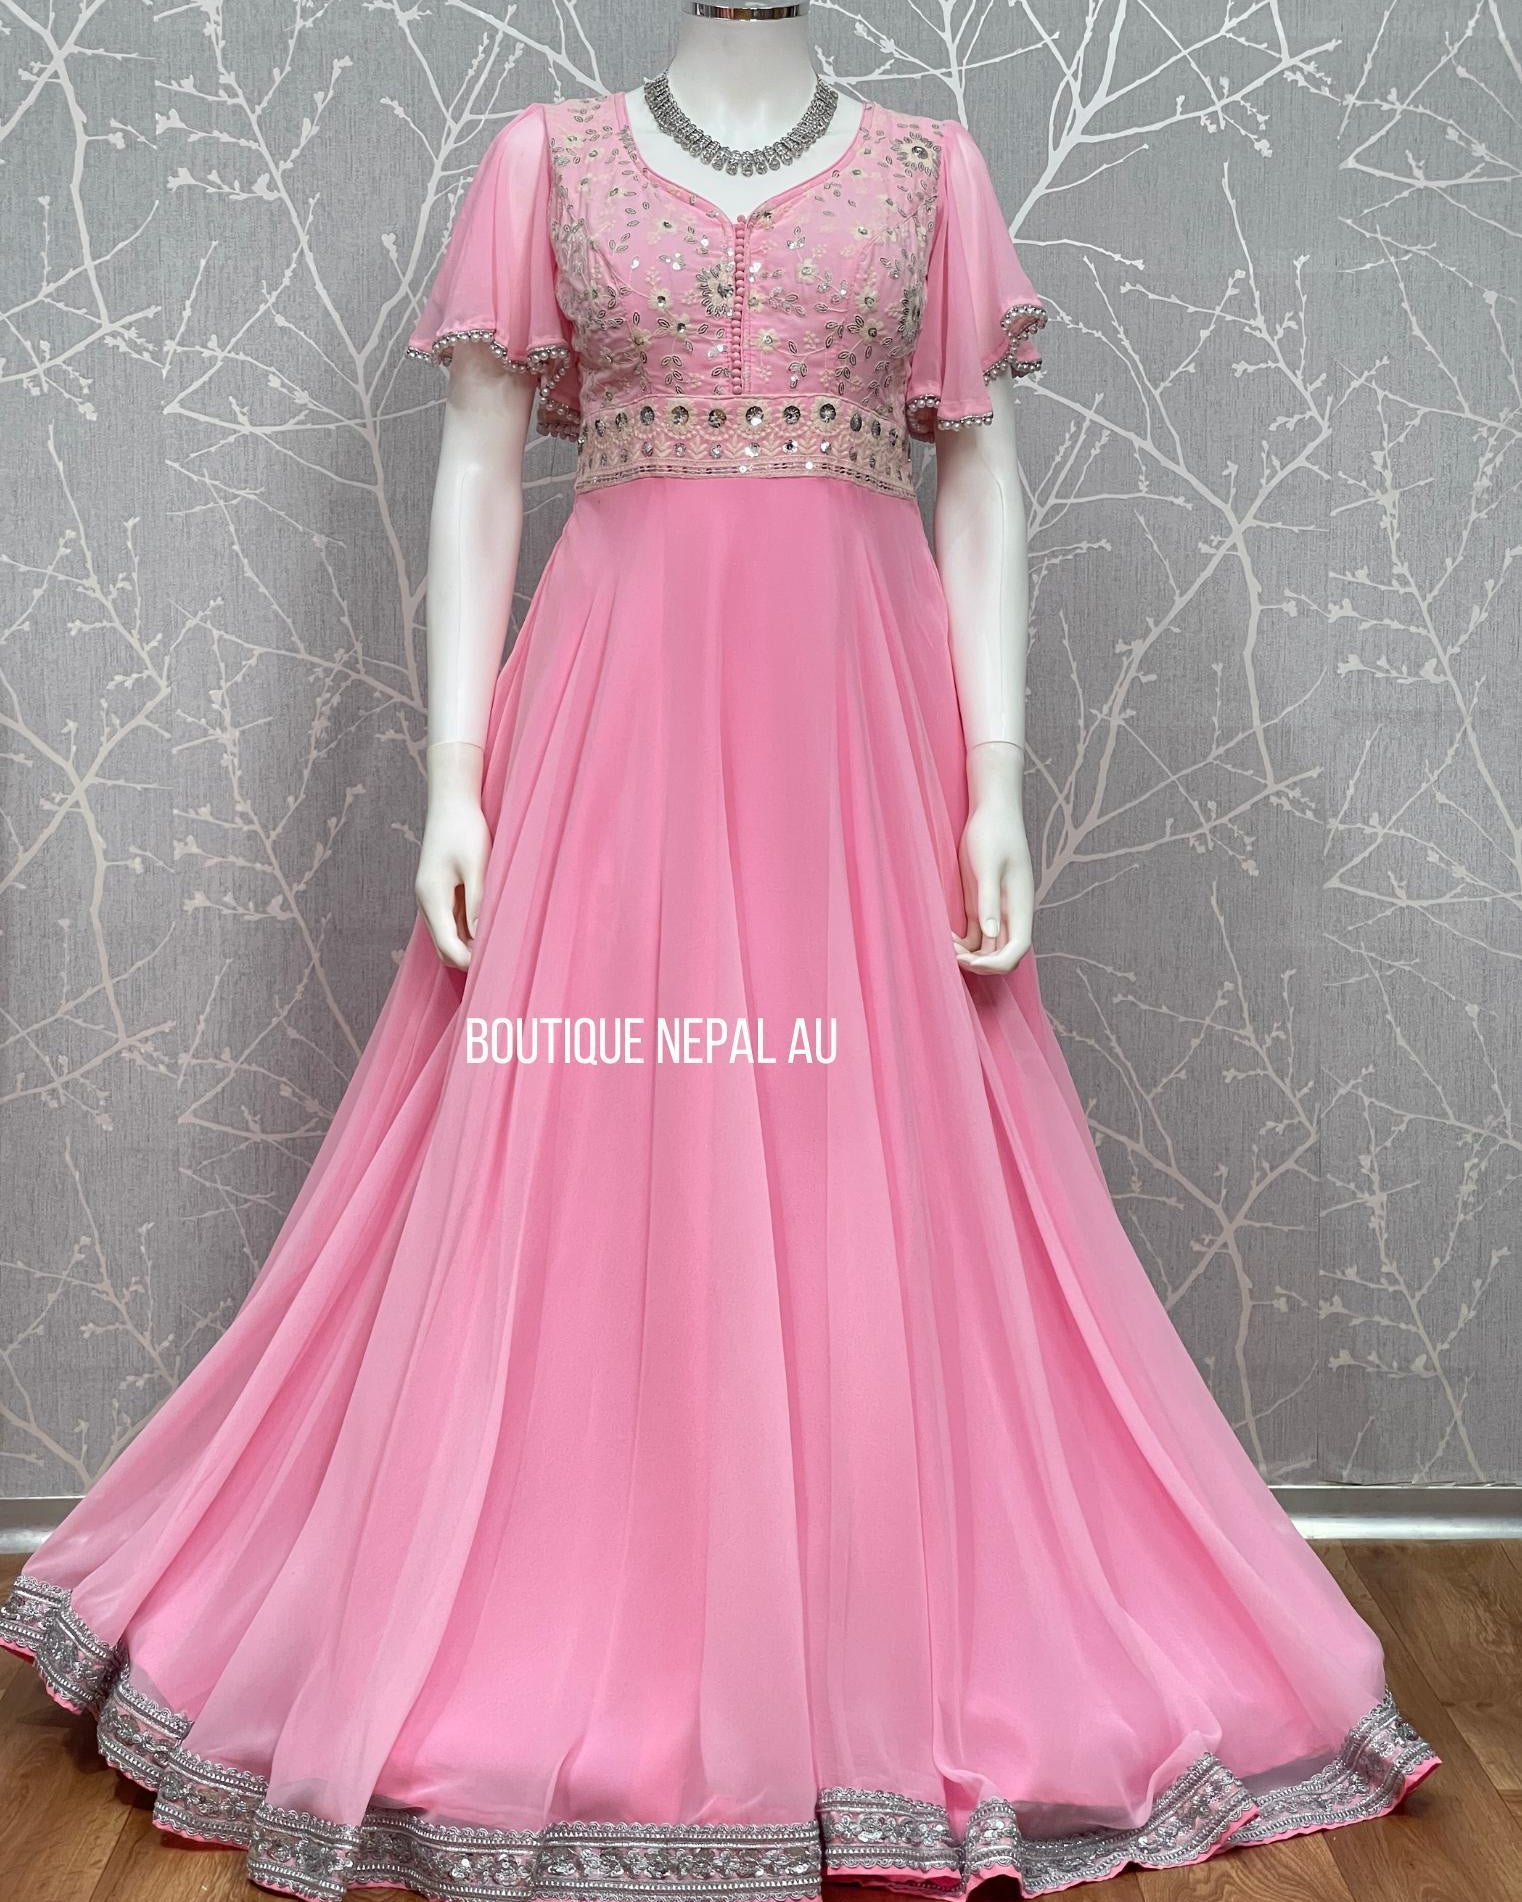 Pink Gown - Boutique Nepal Au